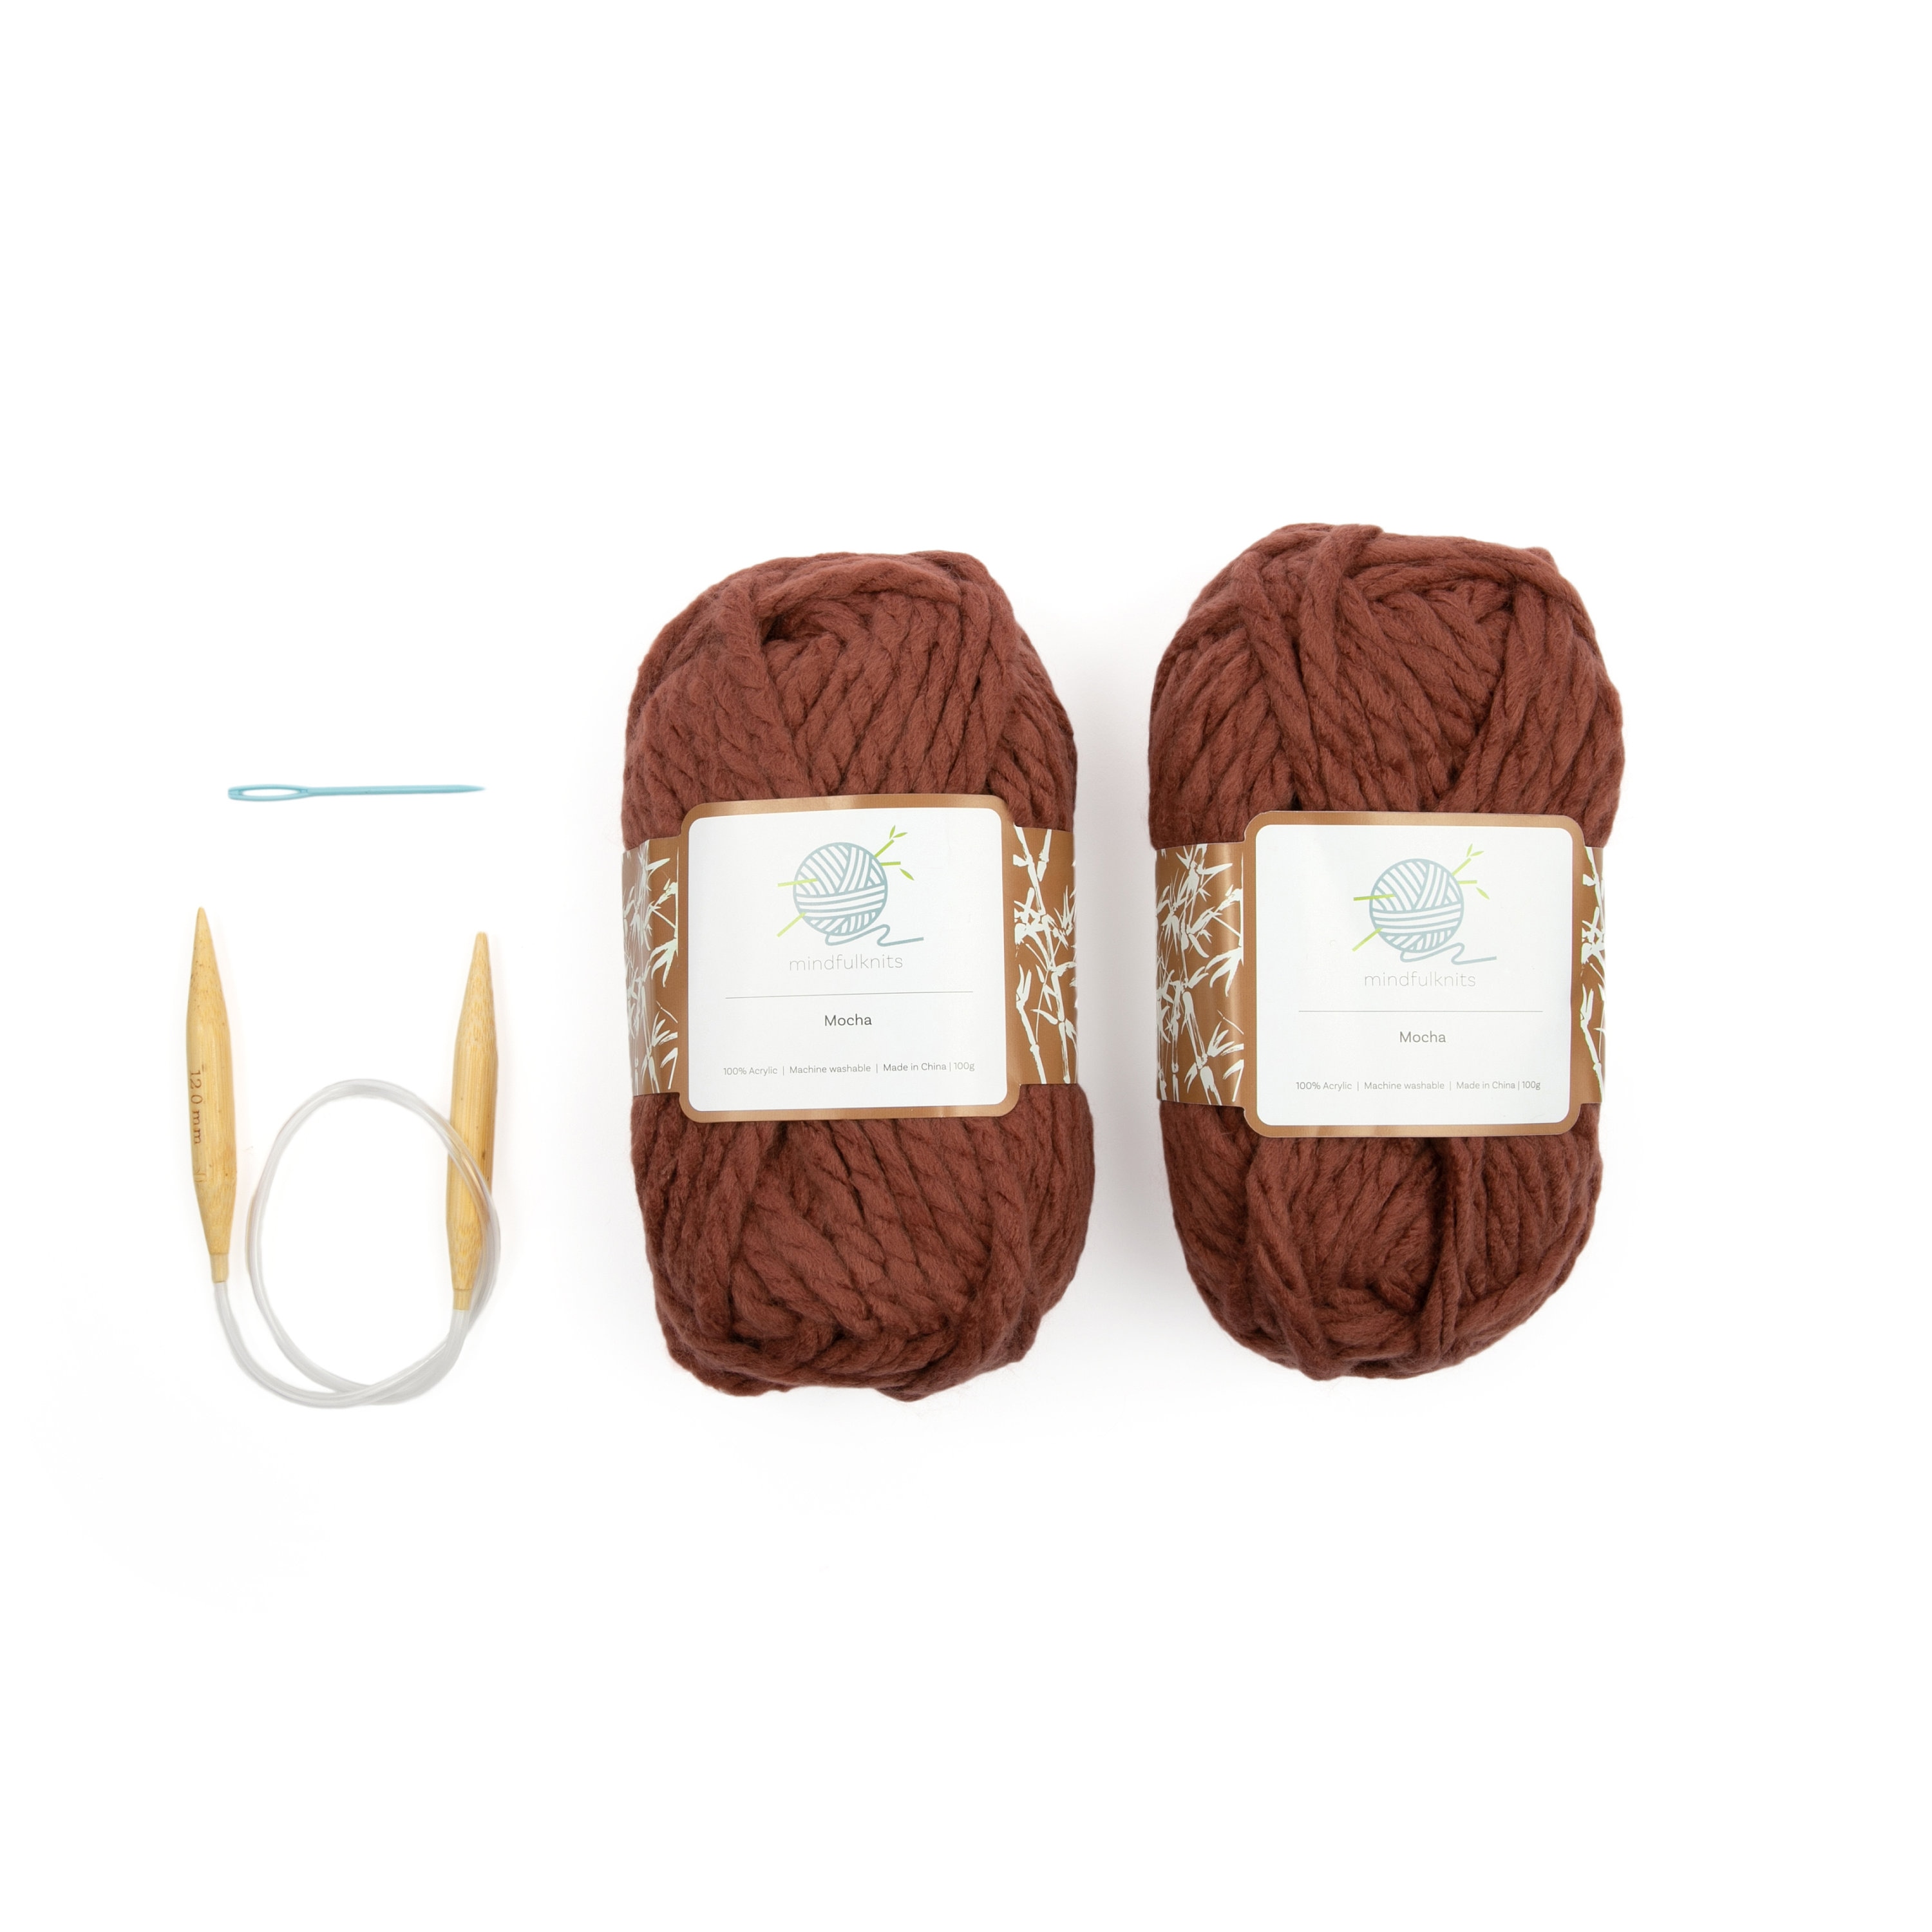 mindfulknits Mindfulness Flora Beginners Knitting Kit, Includes 100% Cotton Knitting Yarn, Circular Knitting Needles, Yarn Needle - Make W